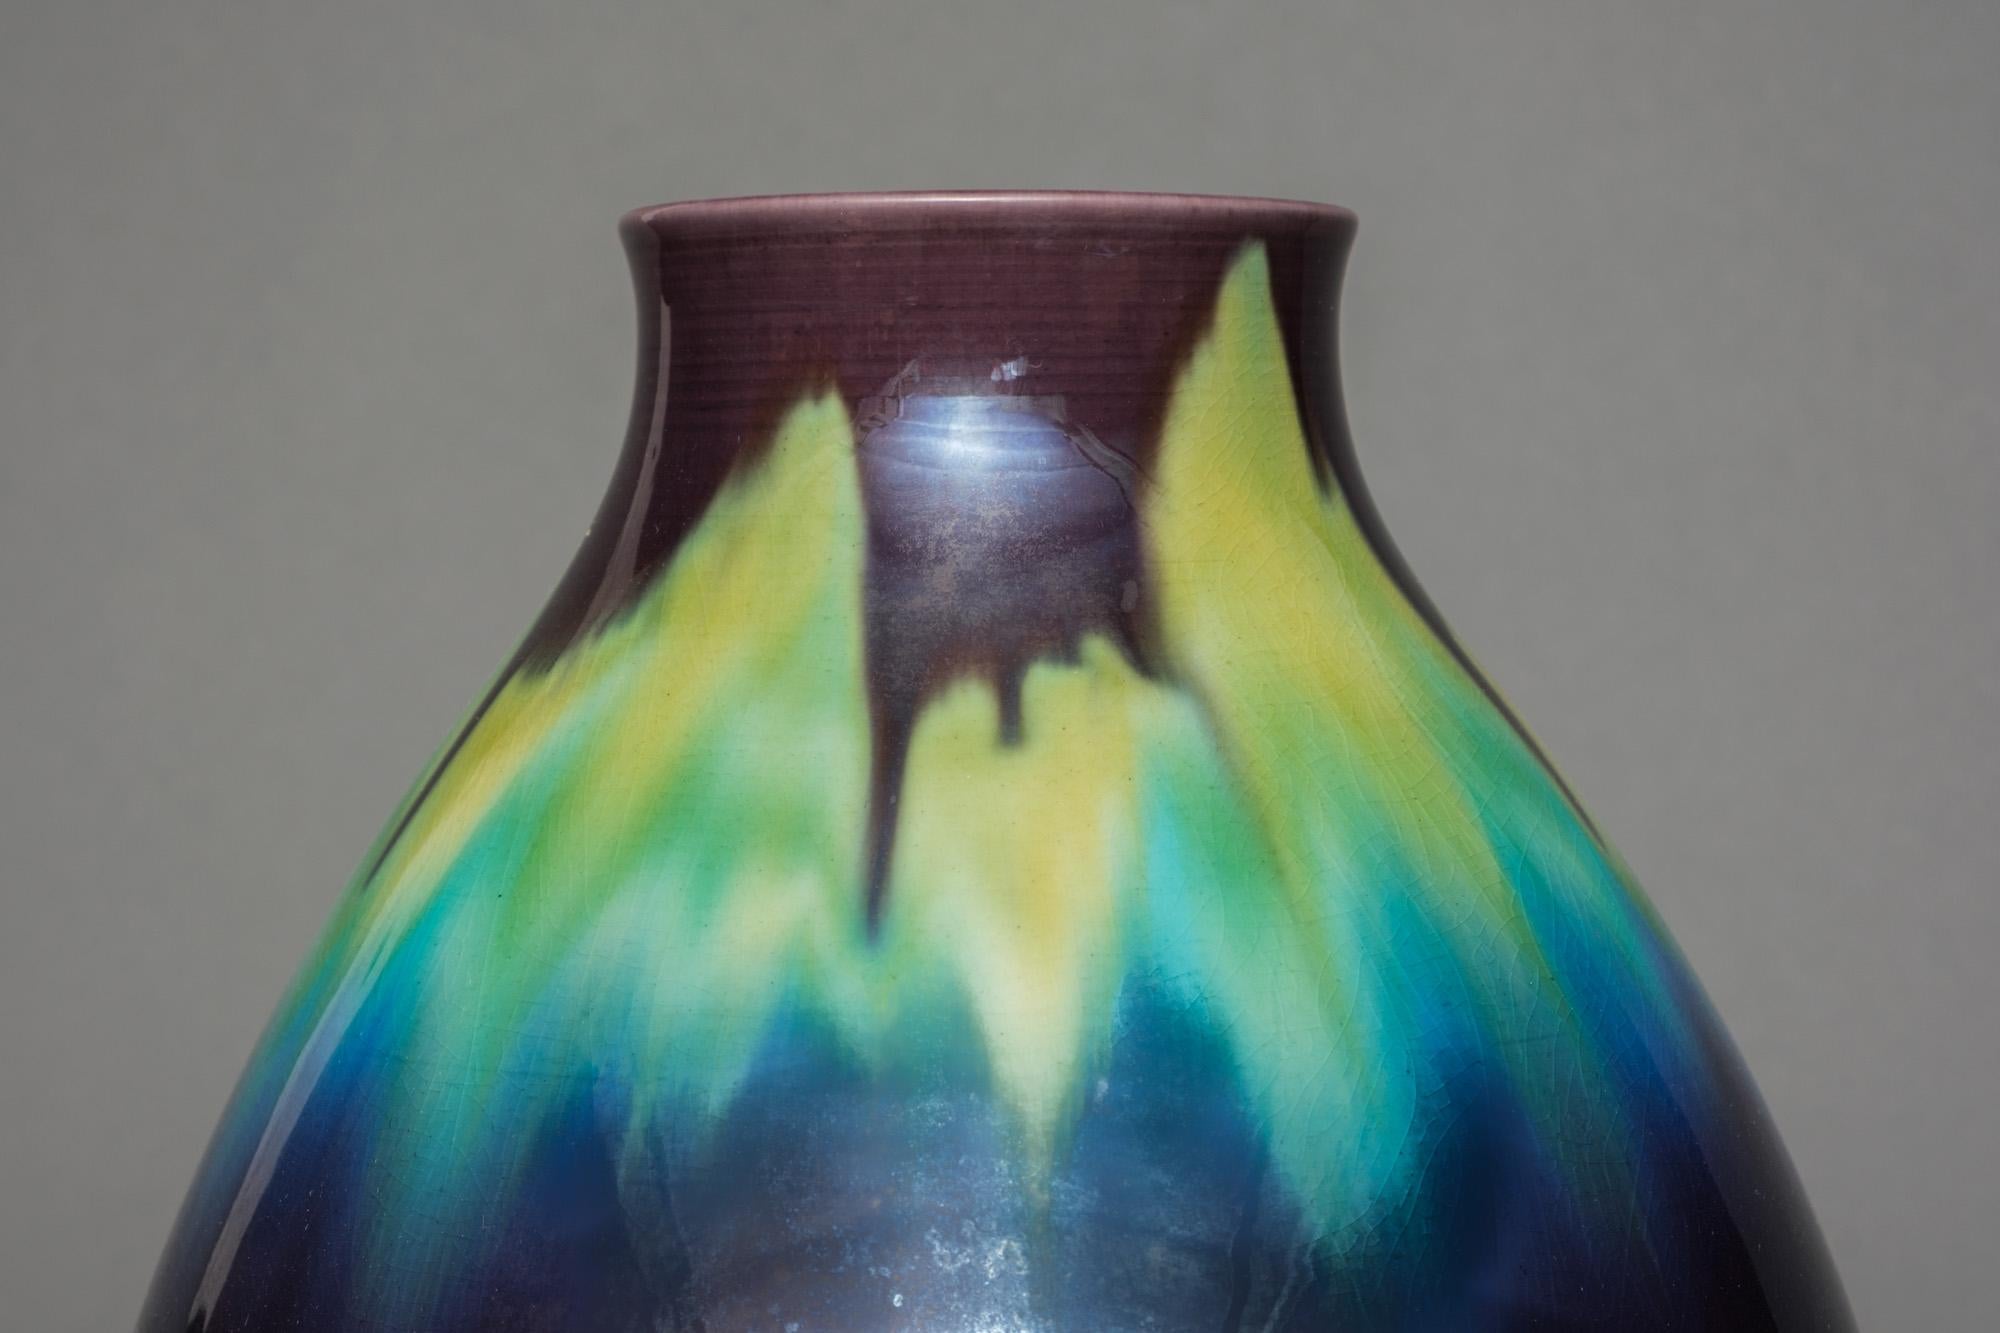 Exquisite Kutani-ware porcelain vase of bluster shape by the famous artist Tokuda Yasokichi III (Masahiko) (1933-2009). Its body decorated with his iconic ‘saiyu’ glaze in transcending shades of black, azure blue, lime green and aubergine purple.